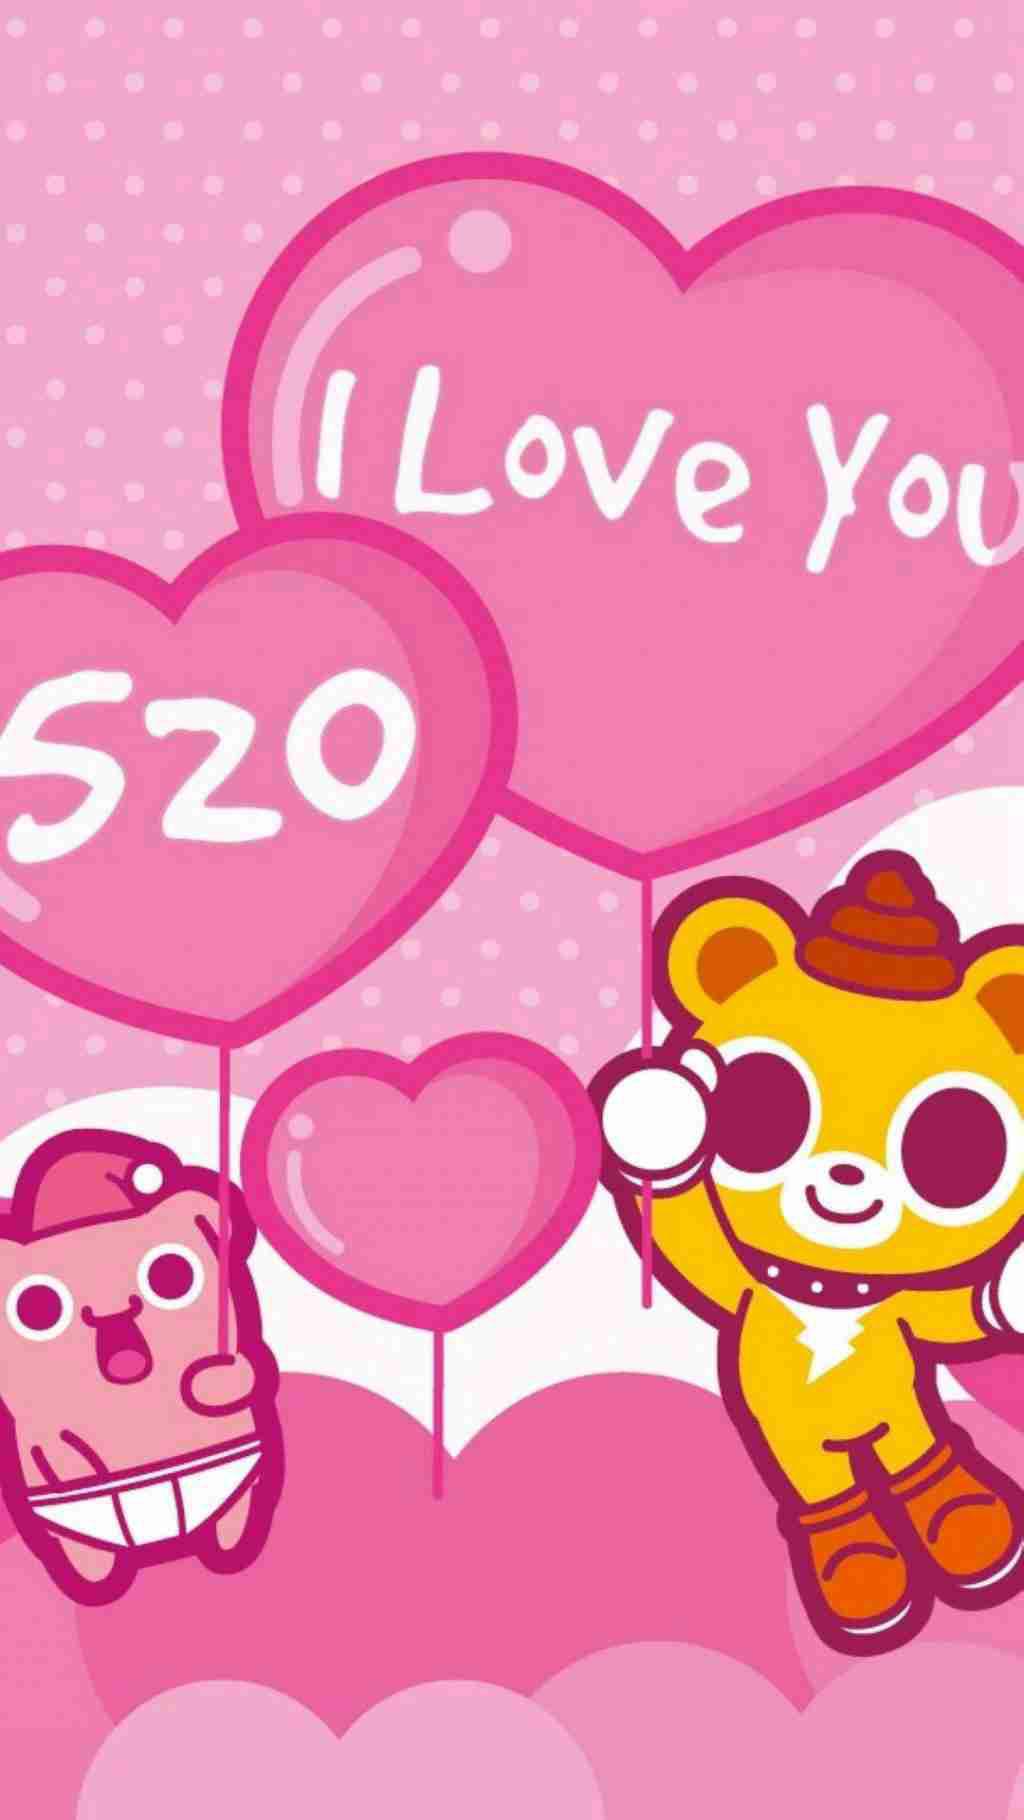 520love浪漫心形背景手机壁纸